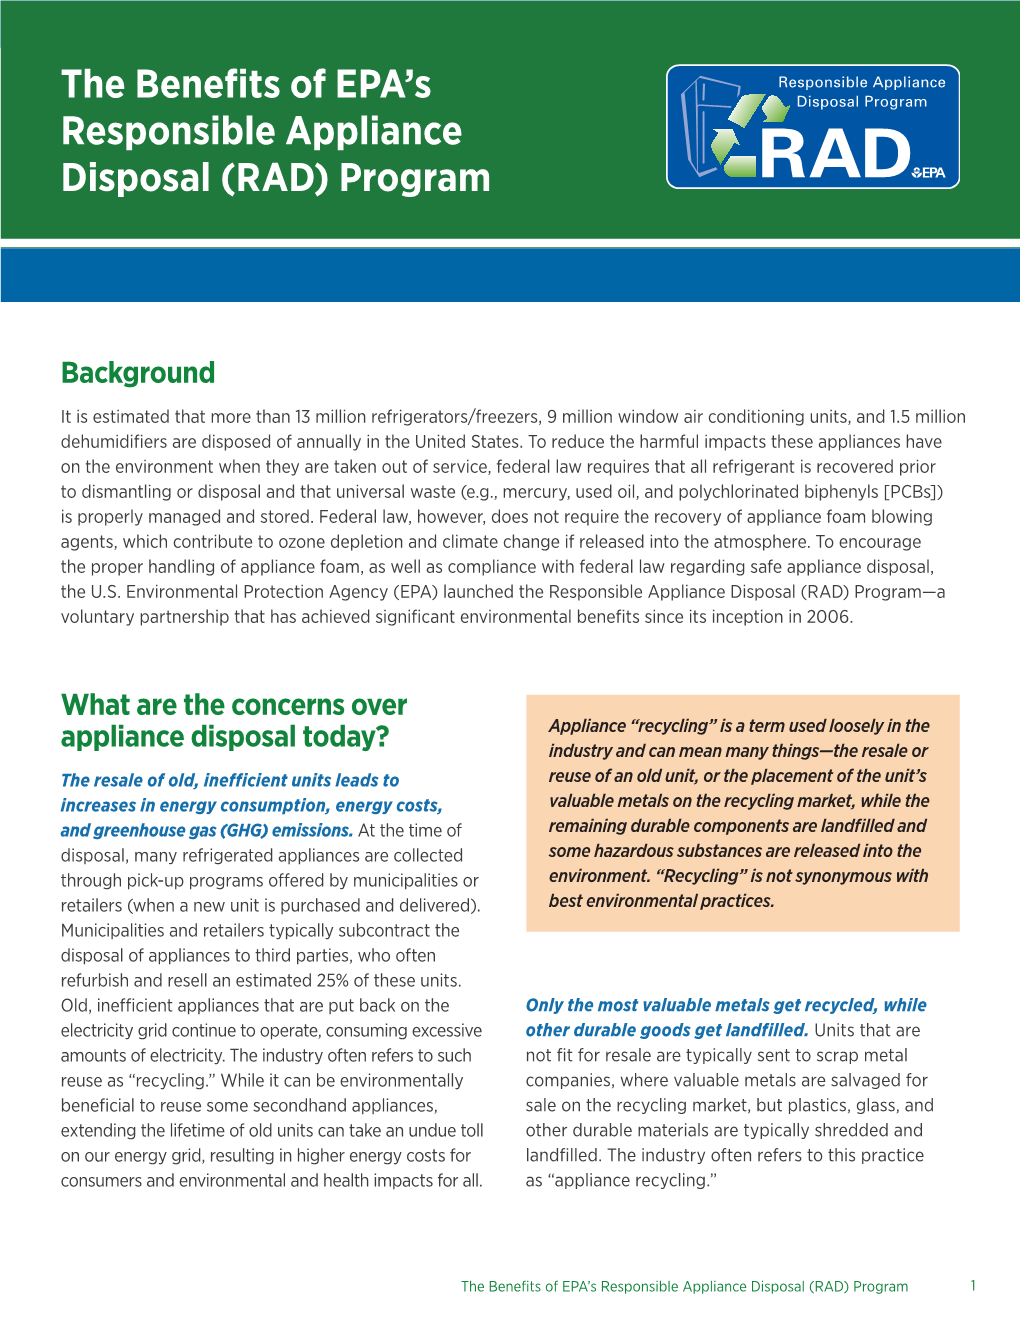 The Benefits of EPA's Responsible Appliance Disposal (RAD) Program